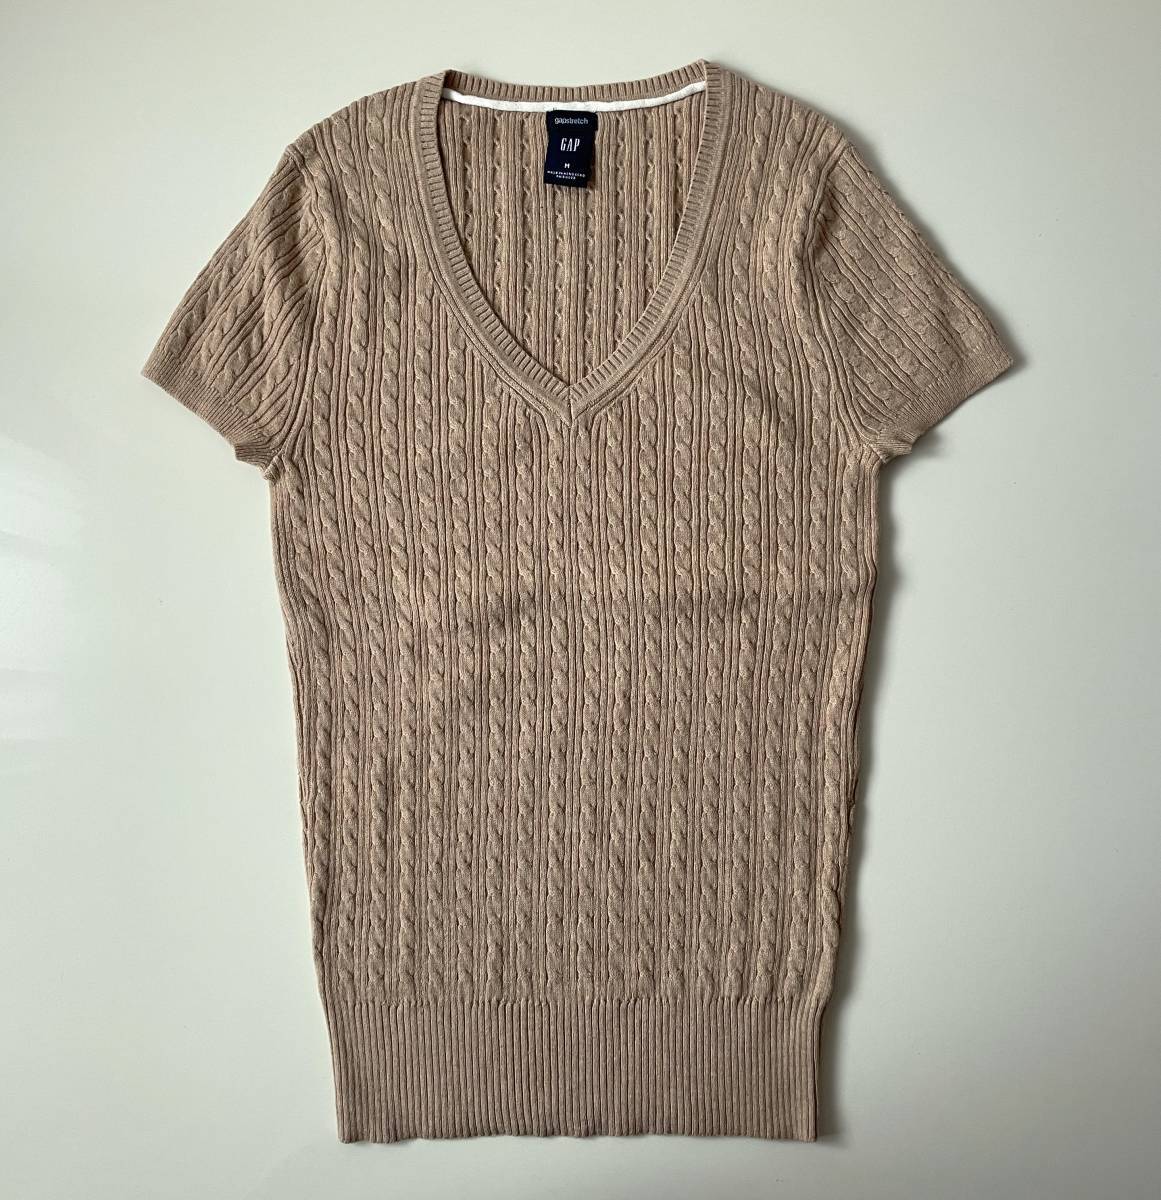  beautiful goods *GAP Gap short sleeves knitted (M)